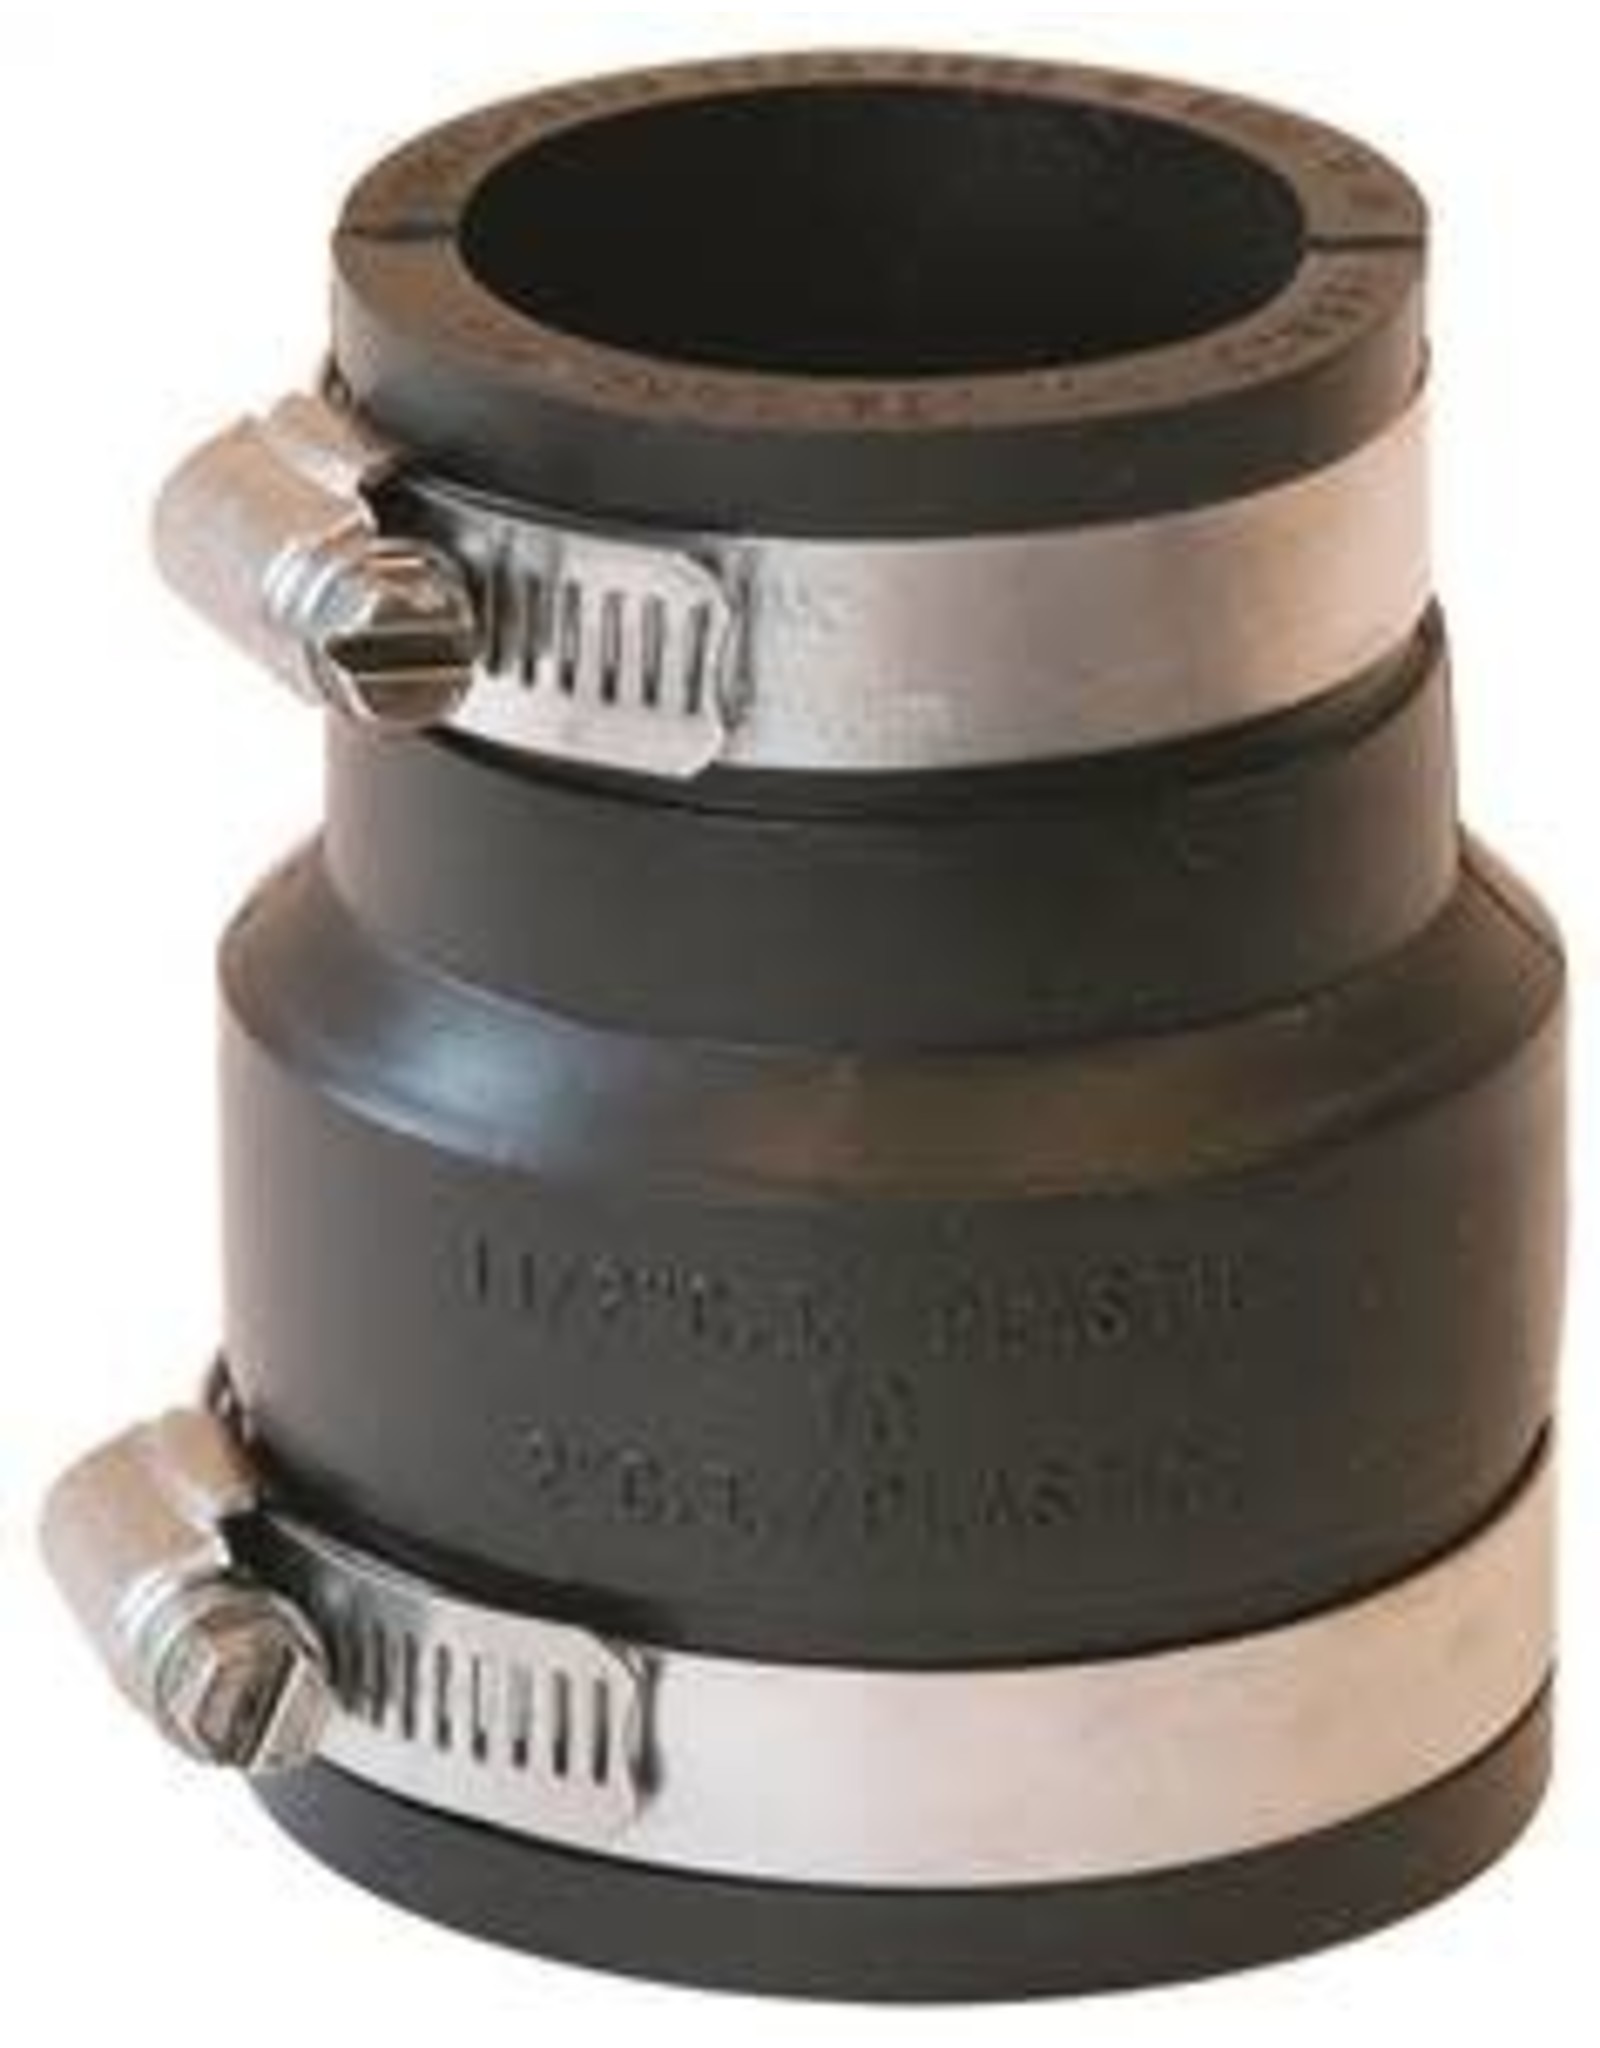 Fernco FERNCO P1056-215 Flexible Pipe Coupling, 2 x 1-1/2 in, PVC, Black, 4.3 psi Pressure